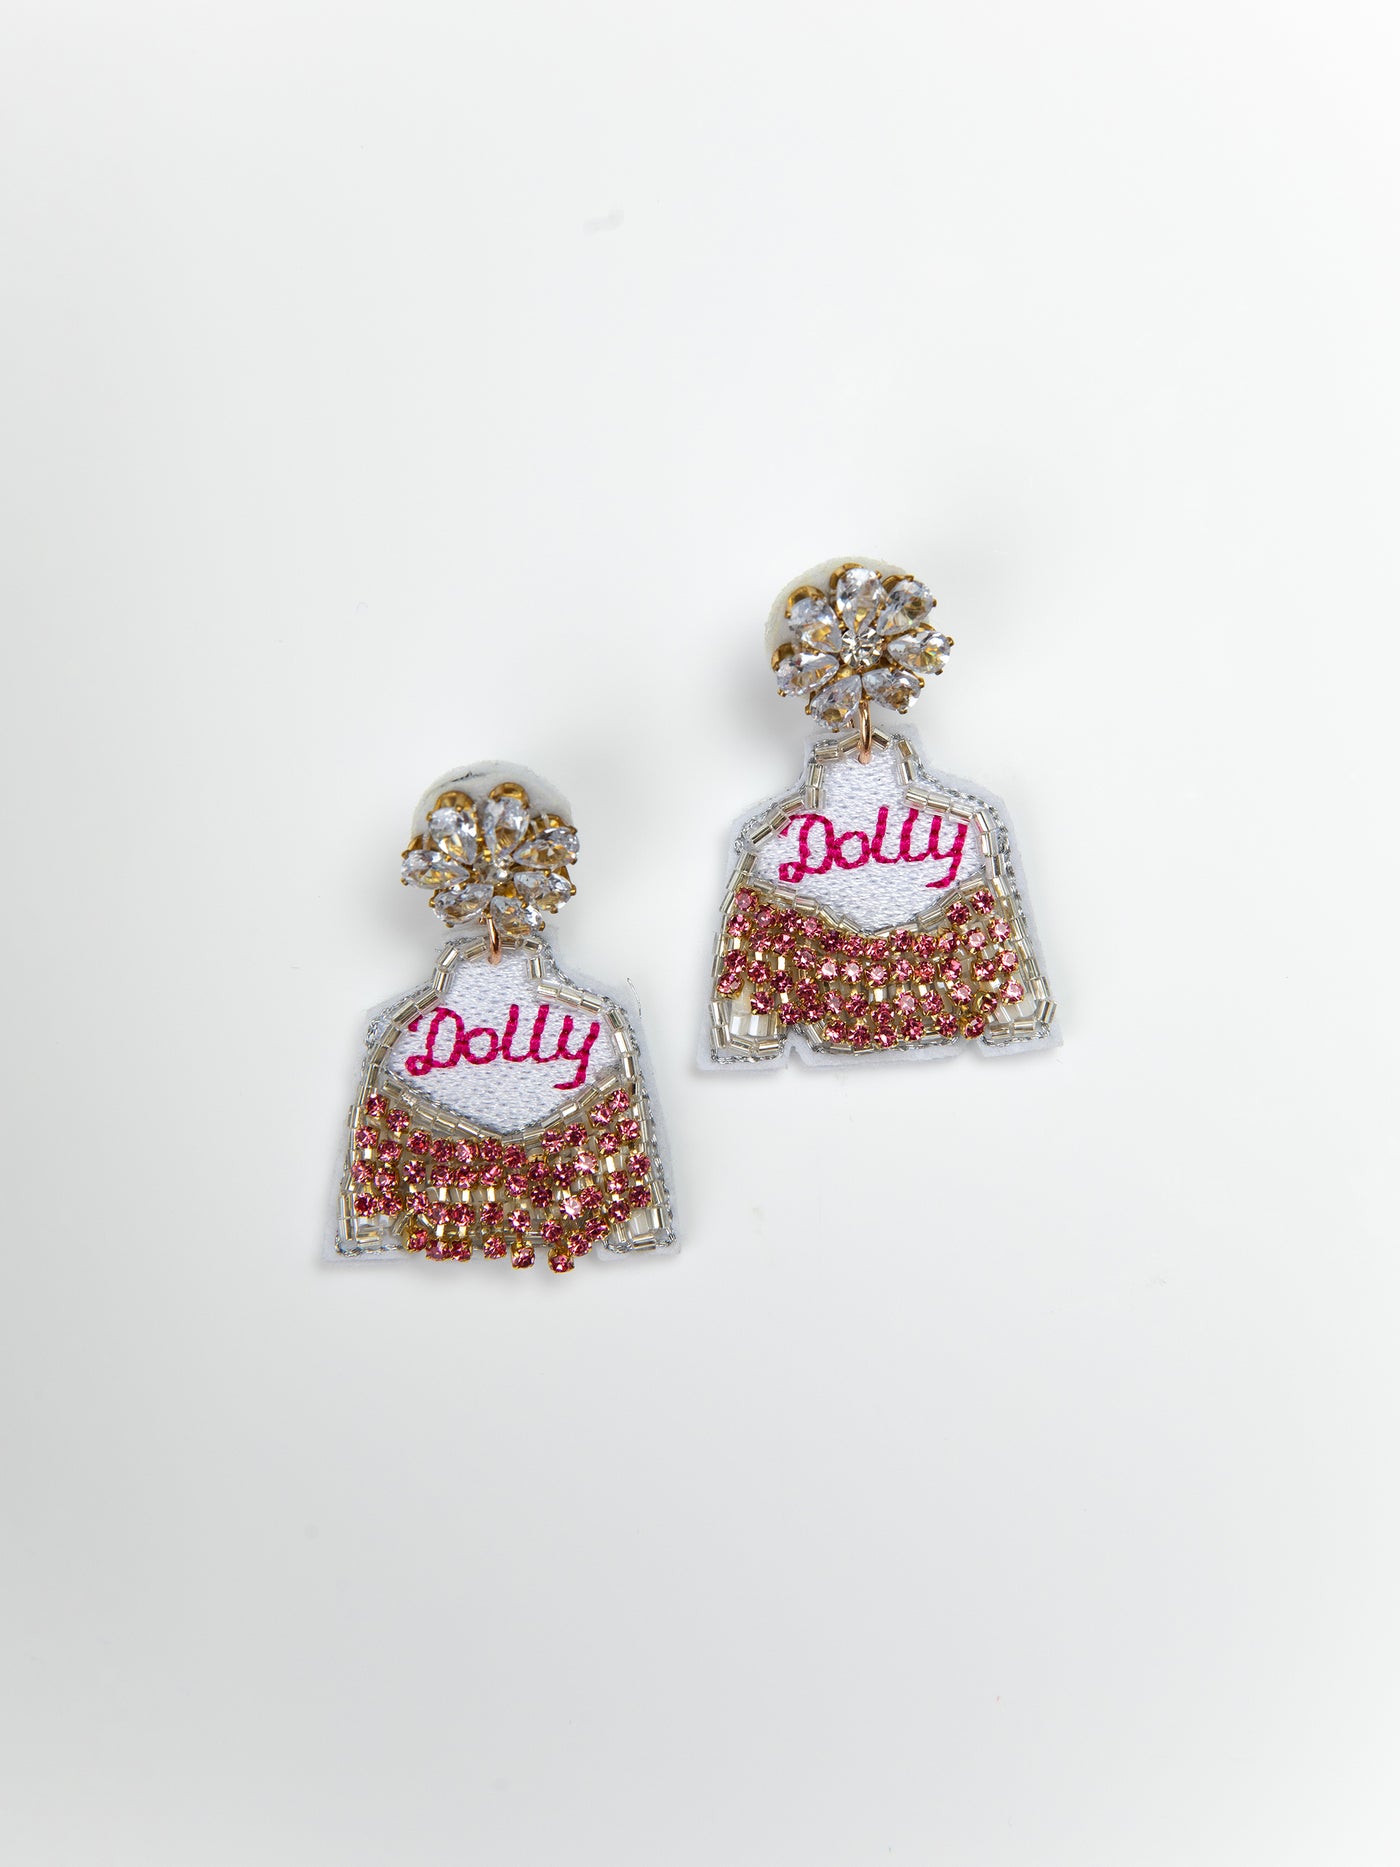 Yeehaw Earrings | Dolly